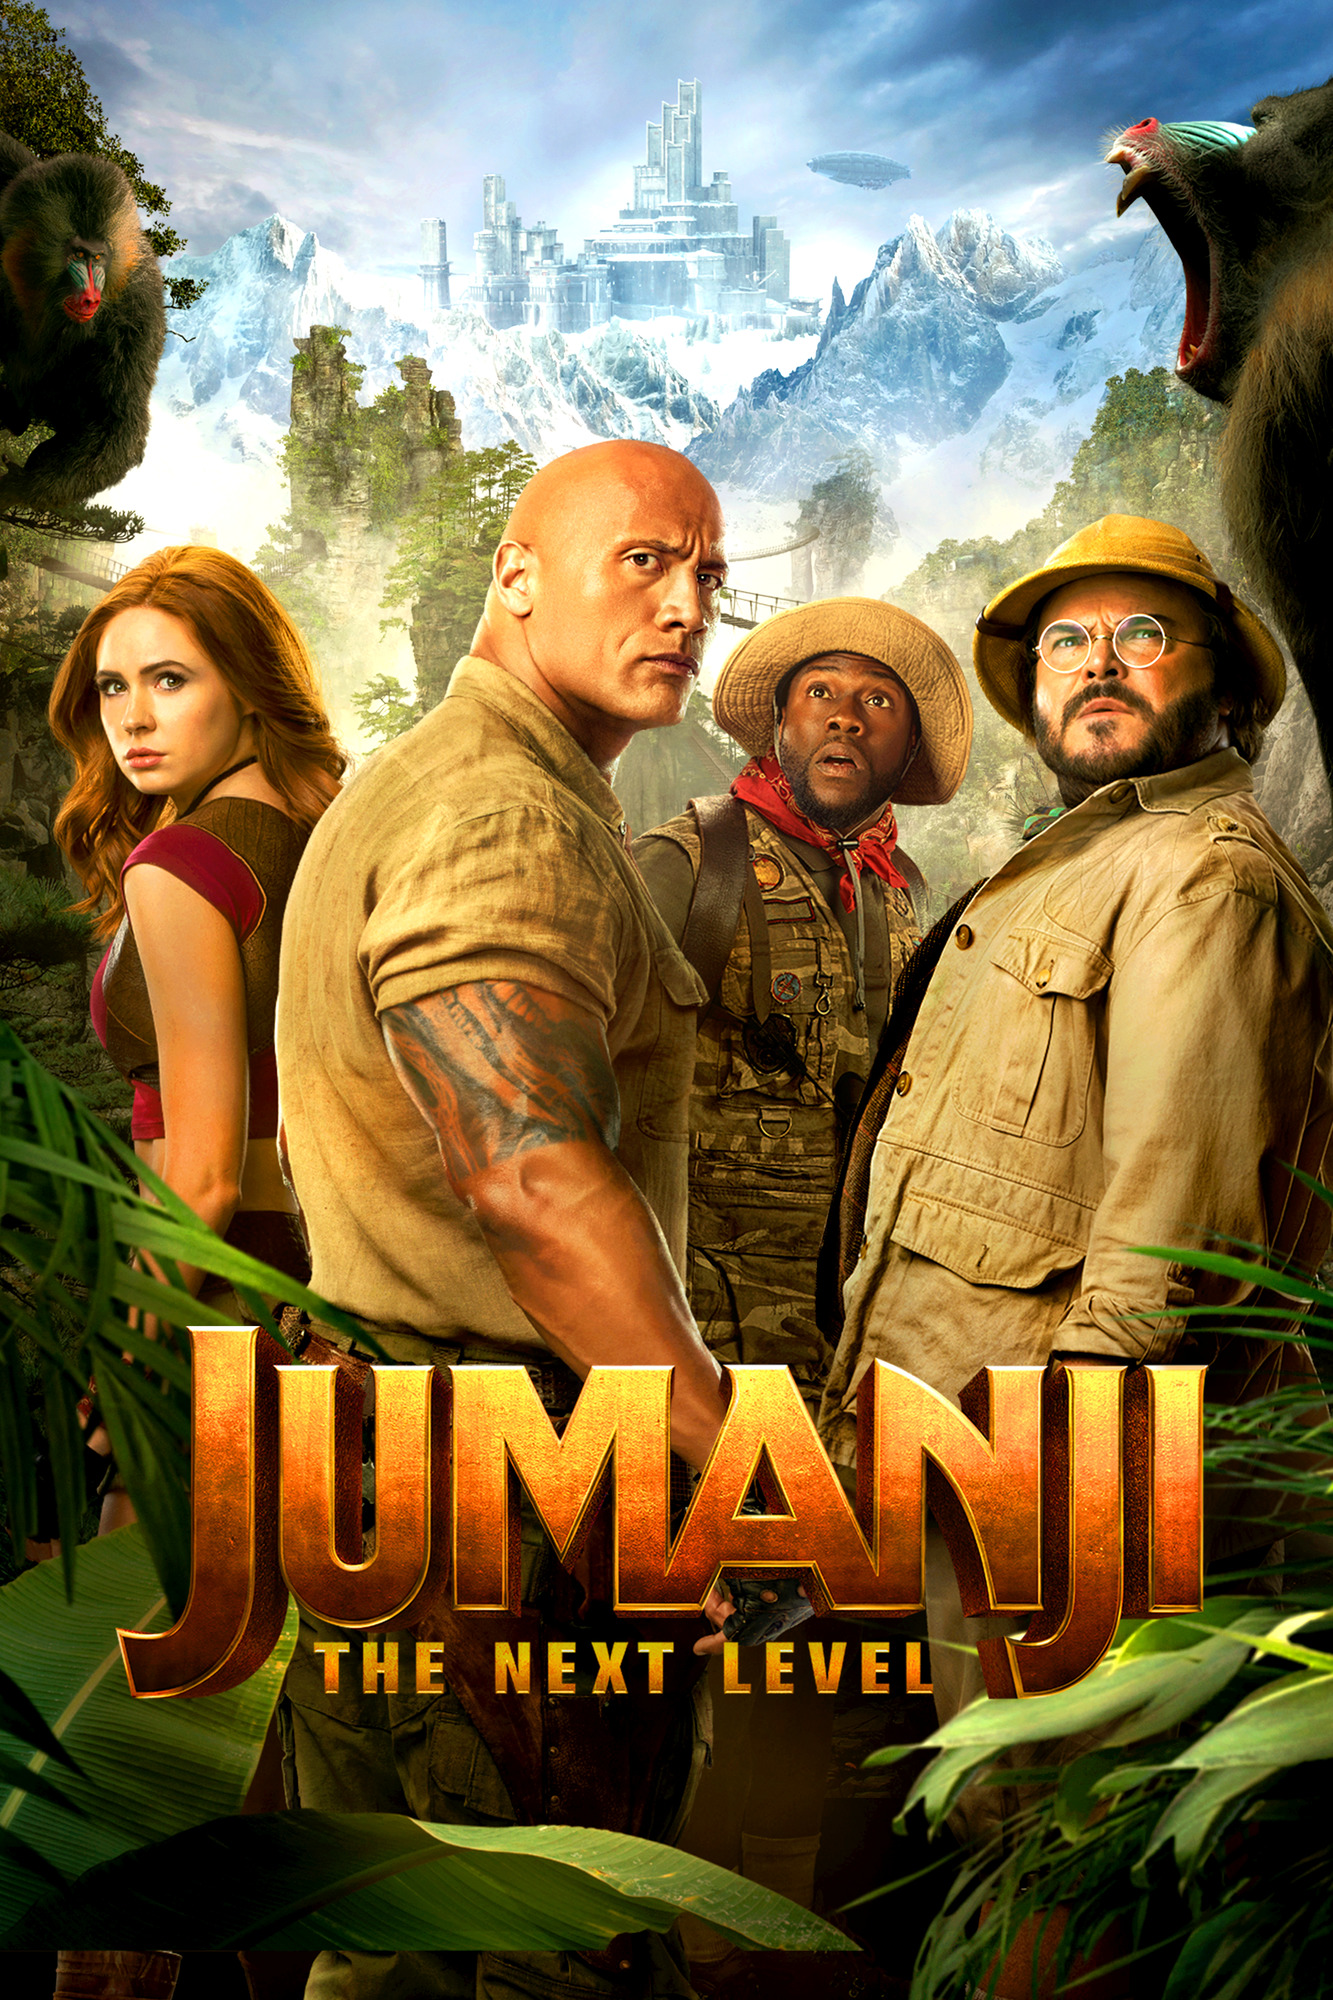 download free jumanji 2 full movie in hindi